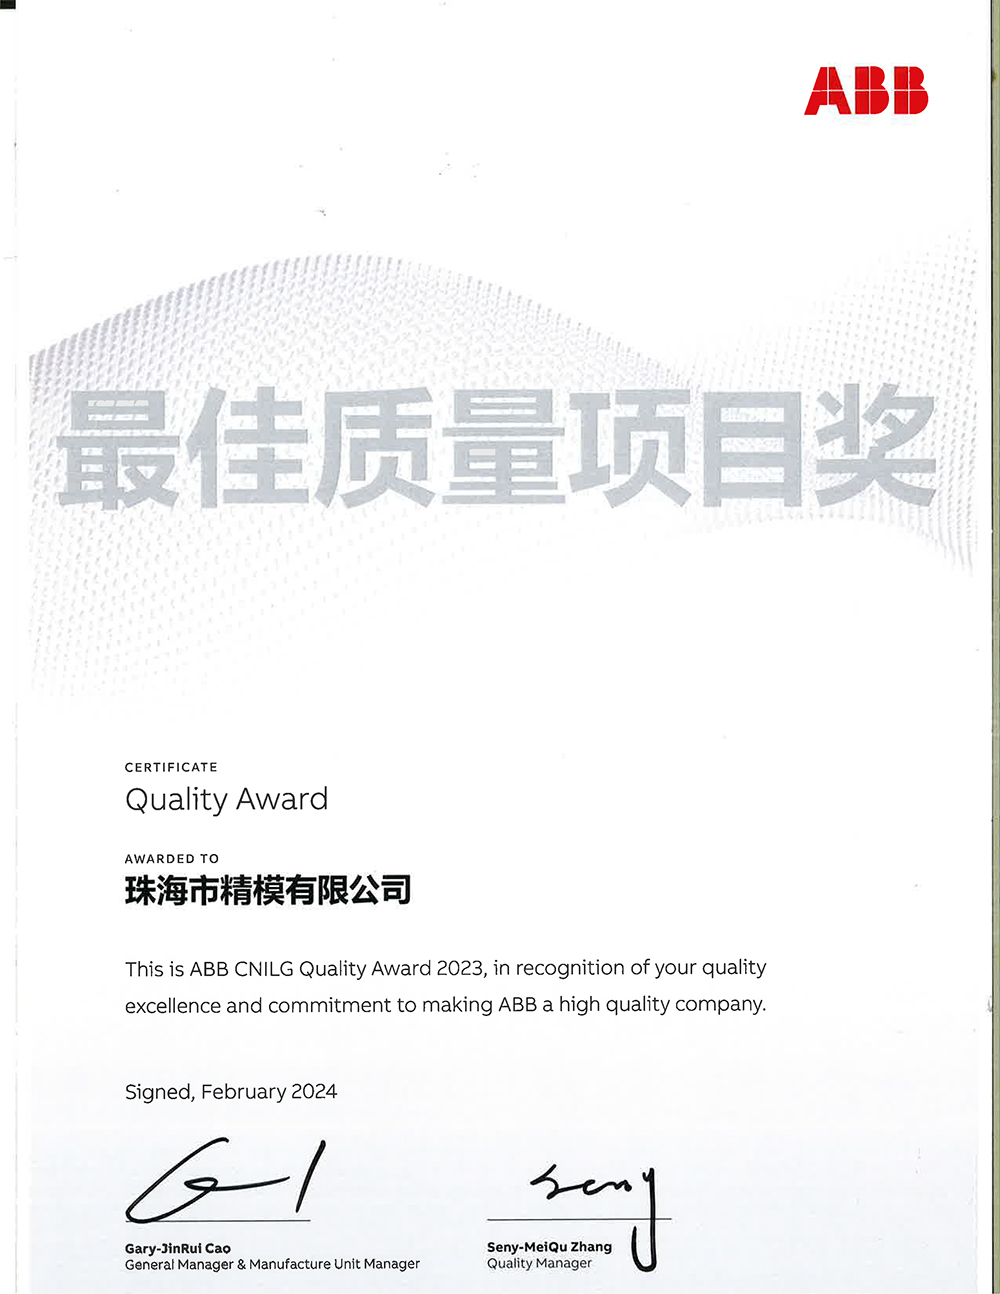 Zhuhai Precision Mold Co., Ltd. won the ABB 